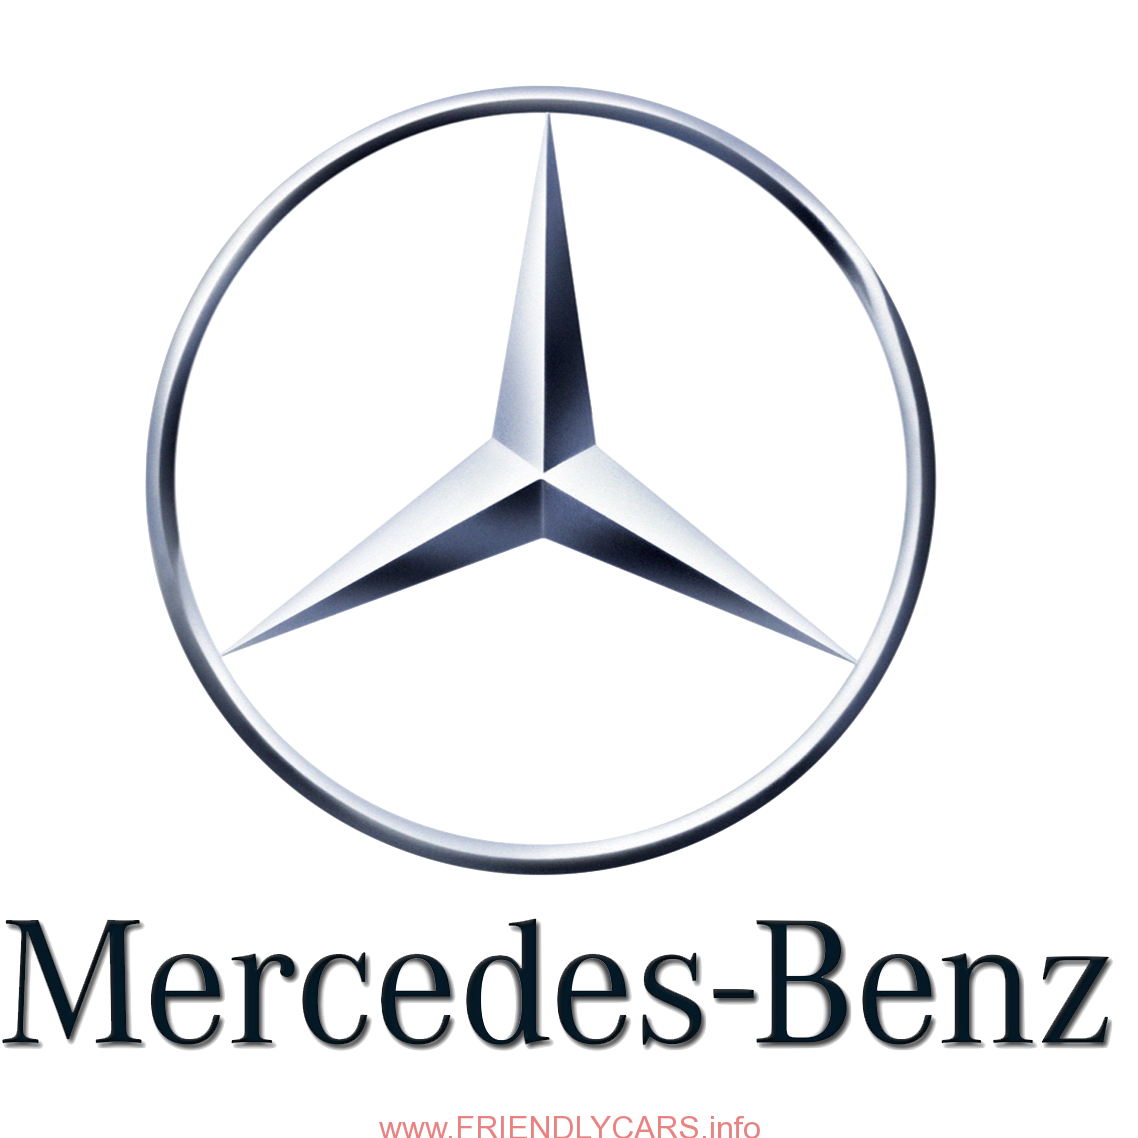 Mercedes-Benz logotipo PNG imagem fundo